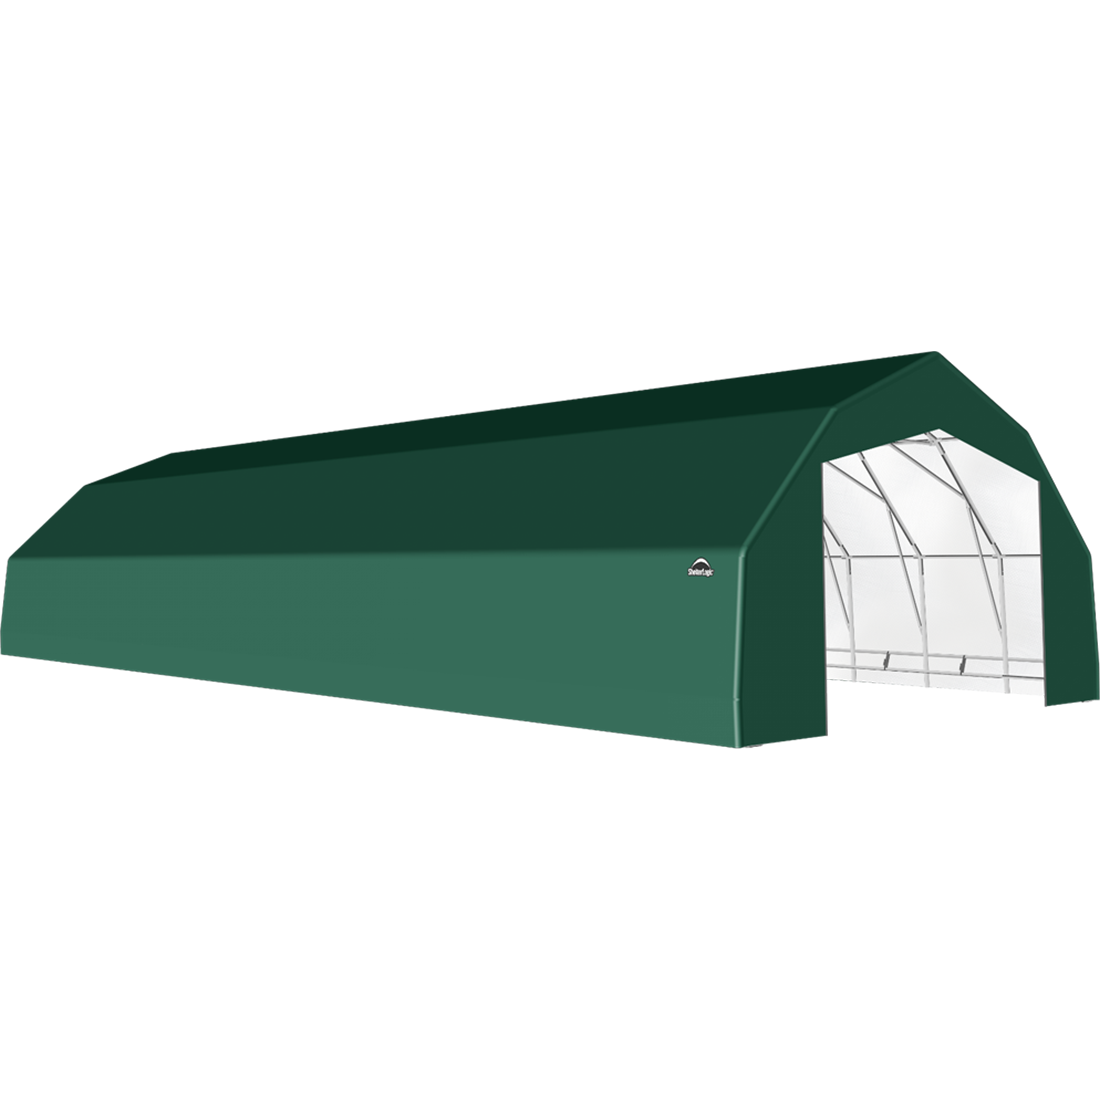 ShelterTech SP Series Barn Shelter, 25 ft. x 52 ft. x 14 ft. Heavy Duty PVC 14.5 oz. Green